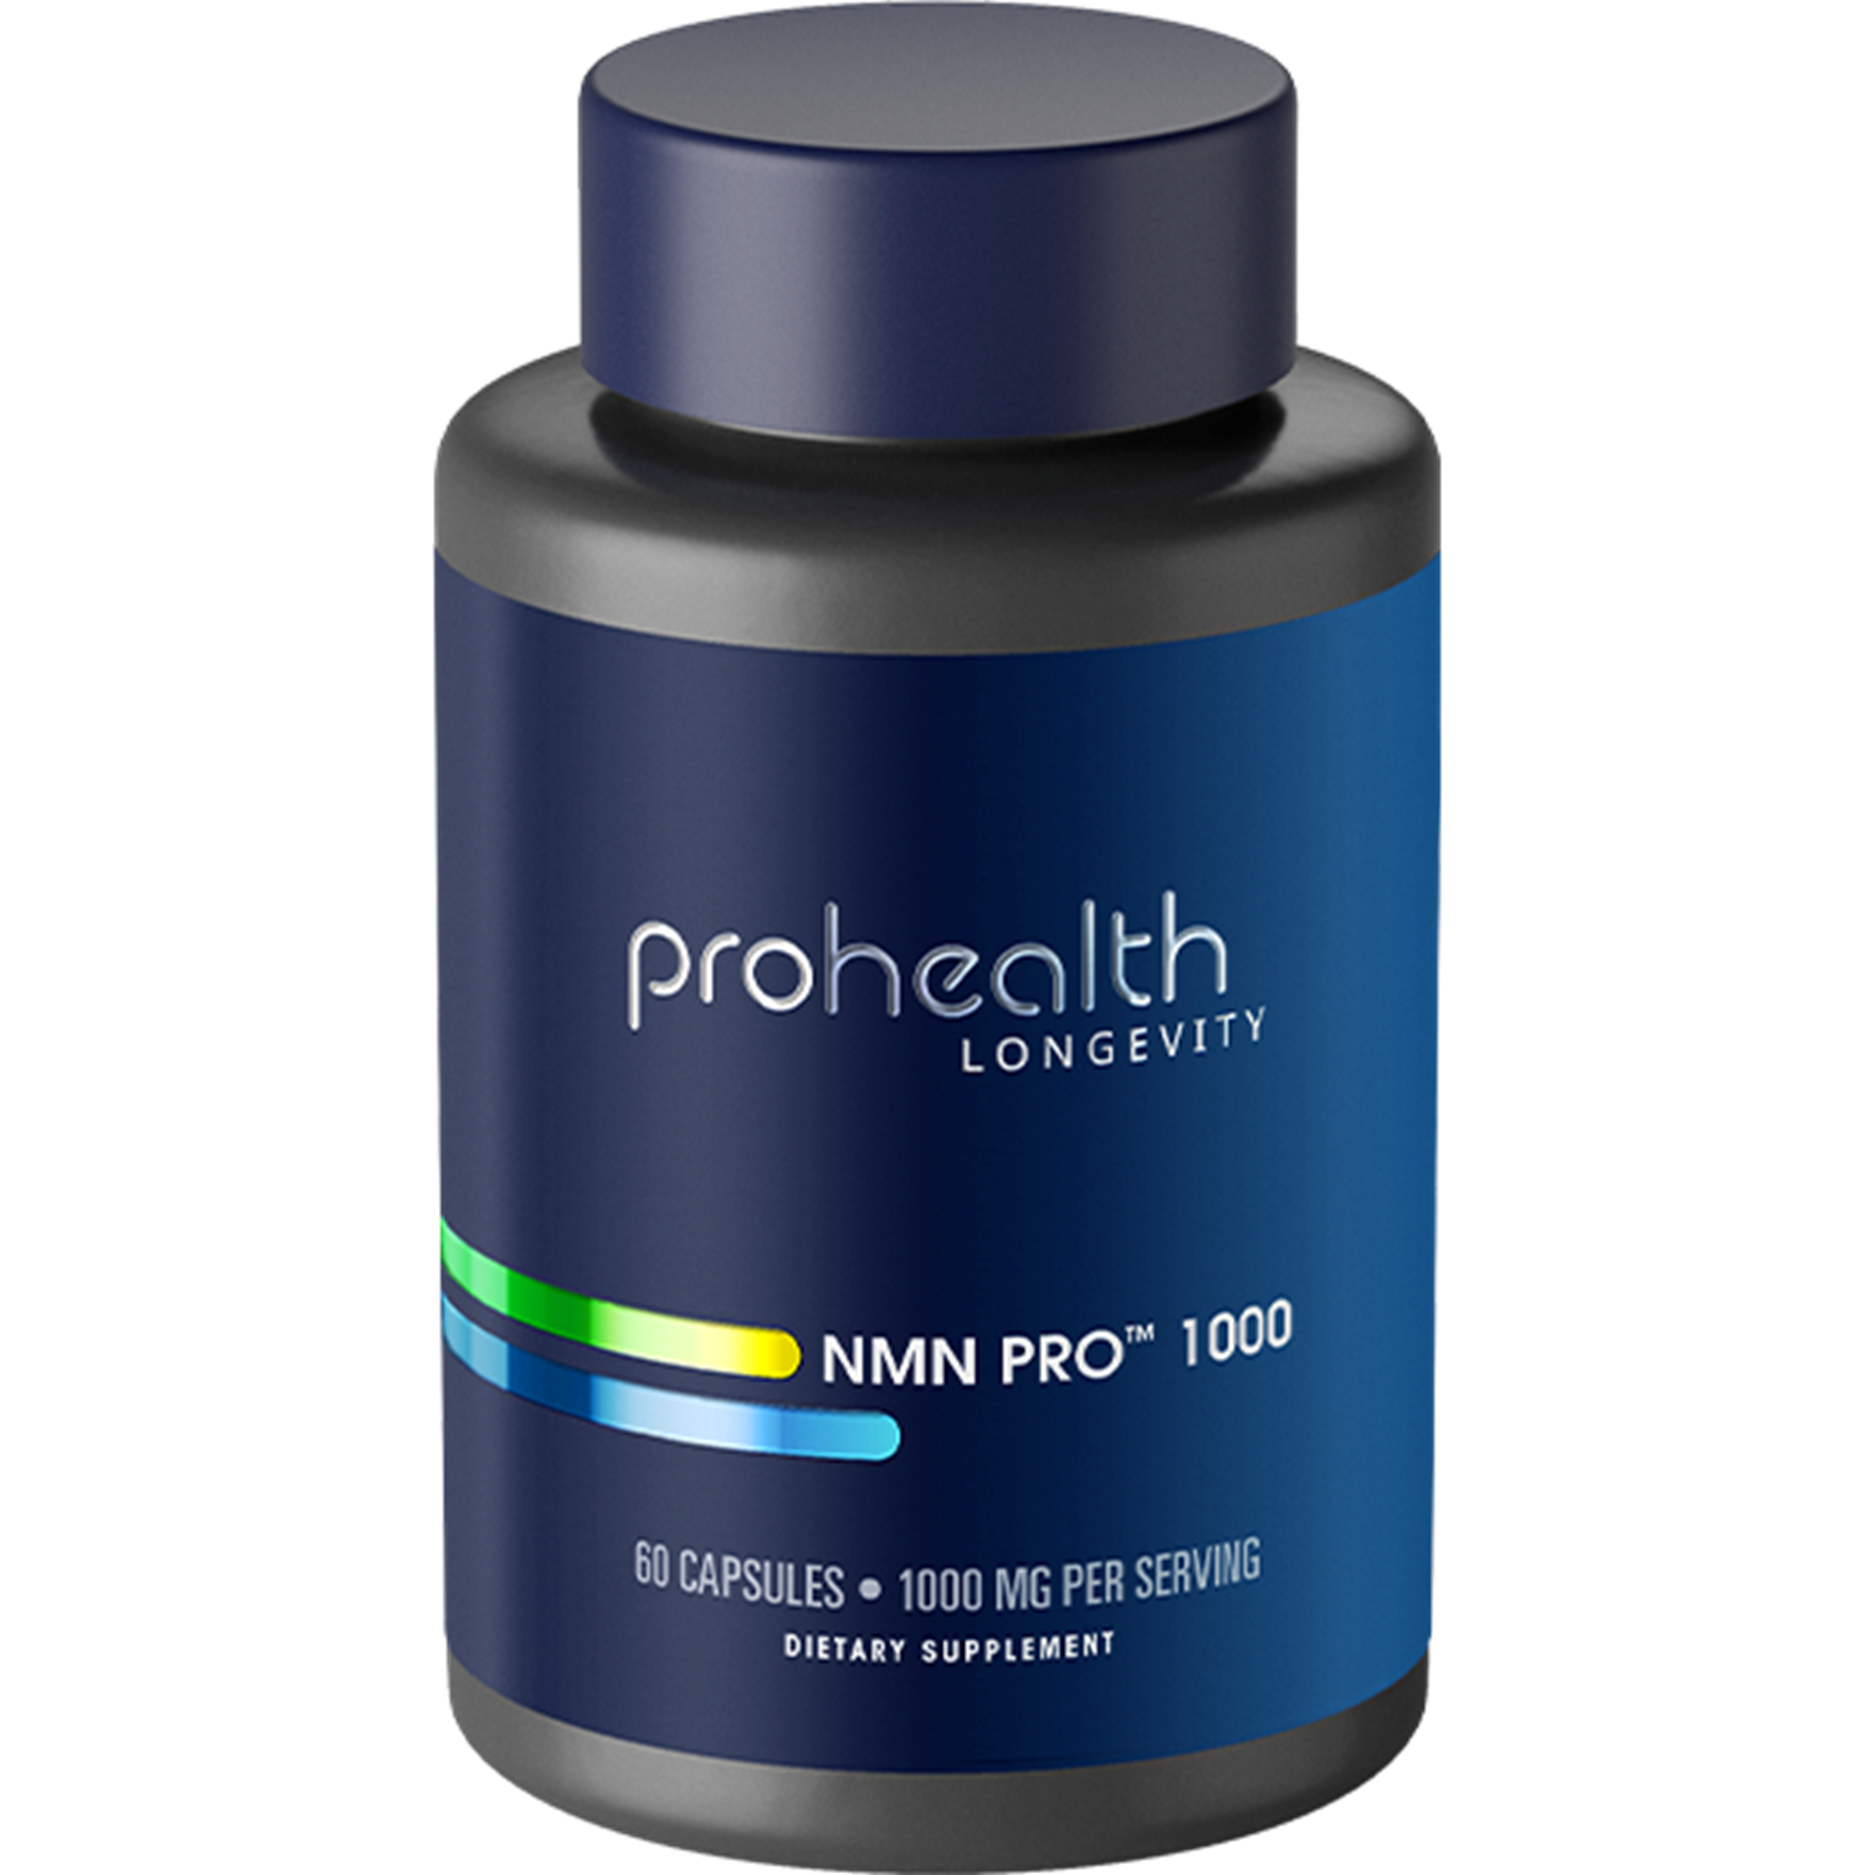 ProHealth - NMN Pro 1000 Enhanced Absorption 